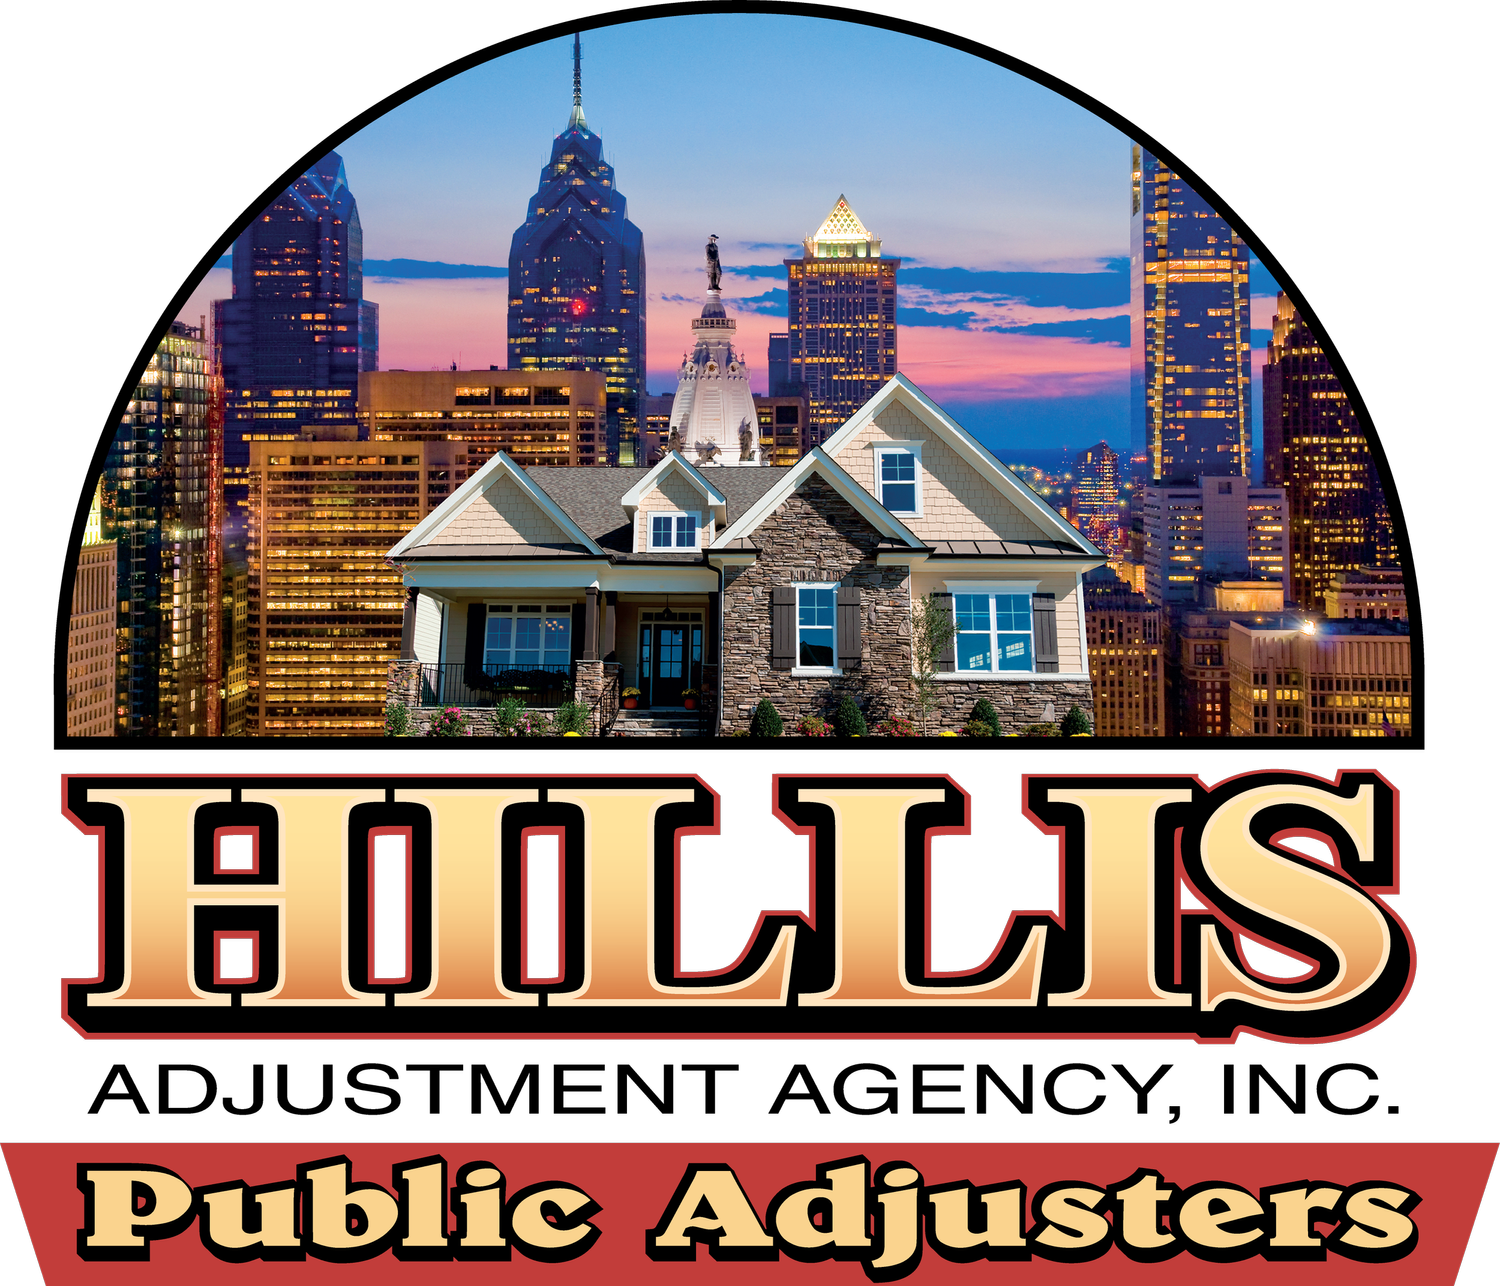 Hillis Public Adjusters